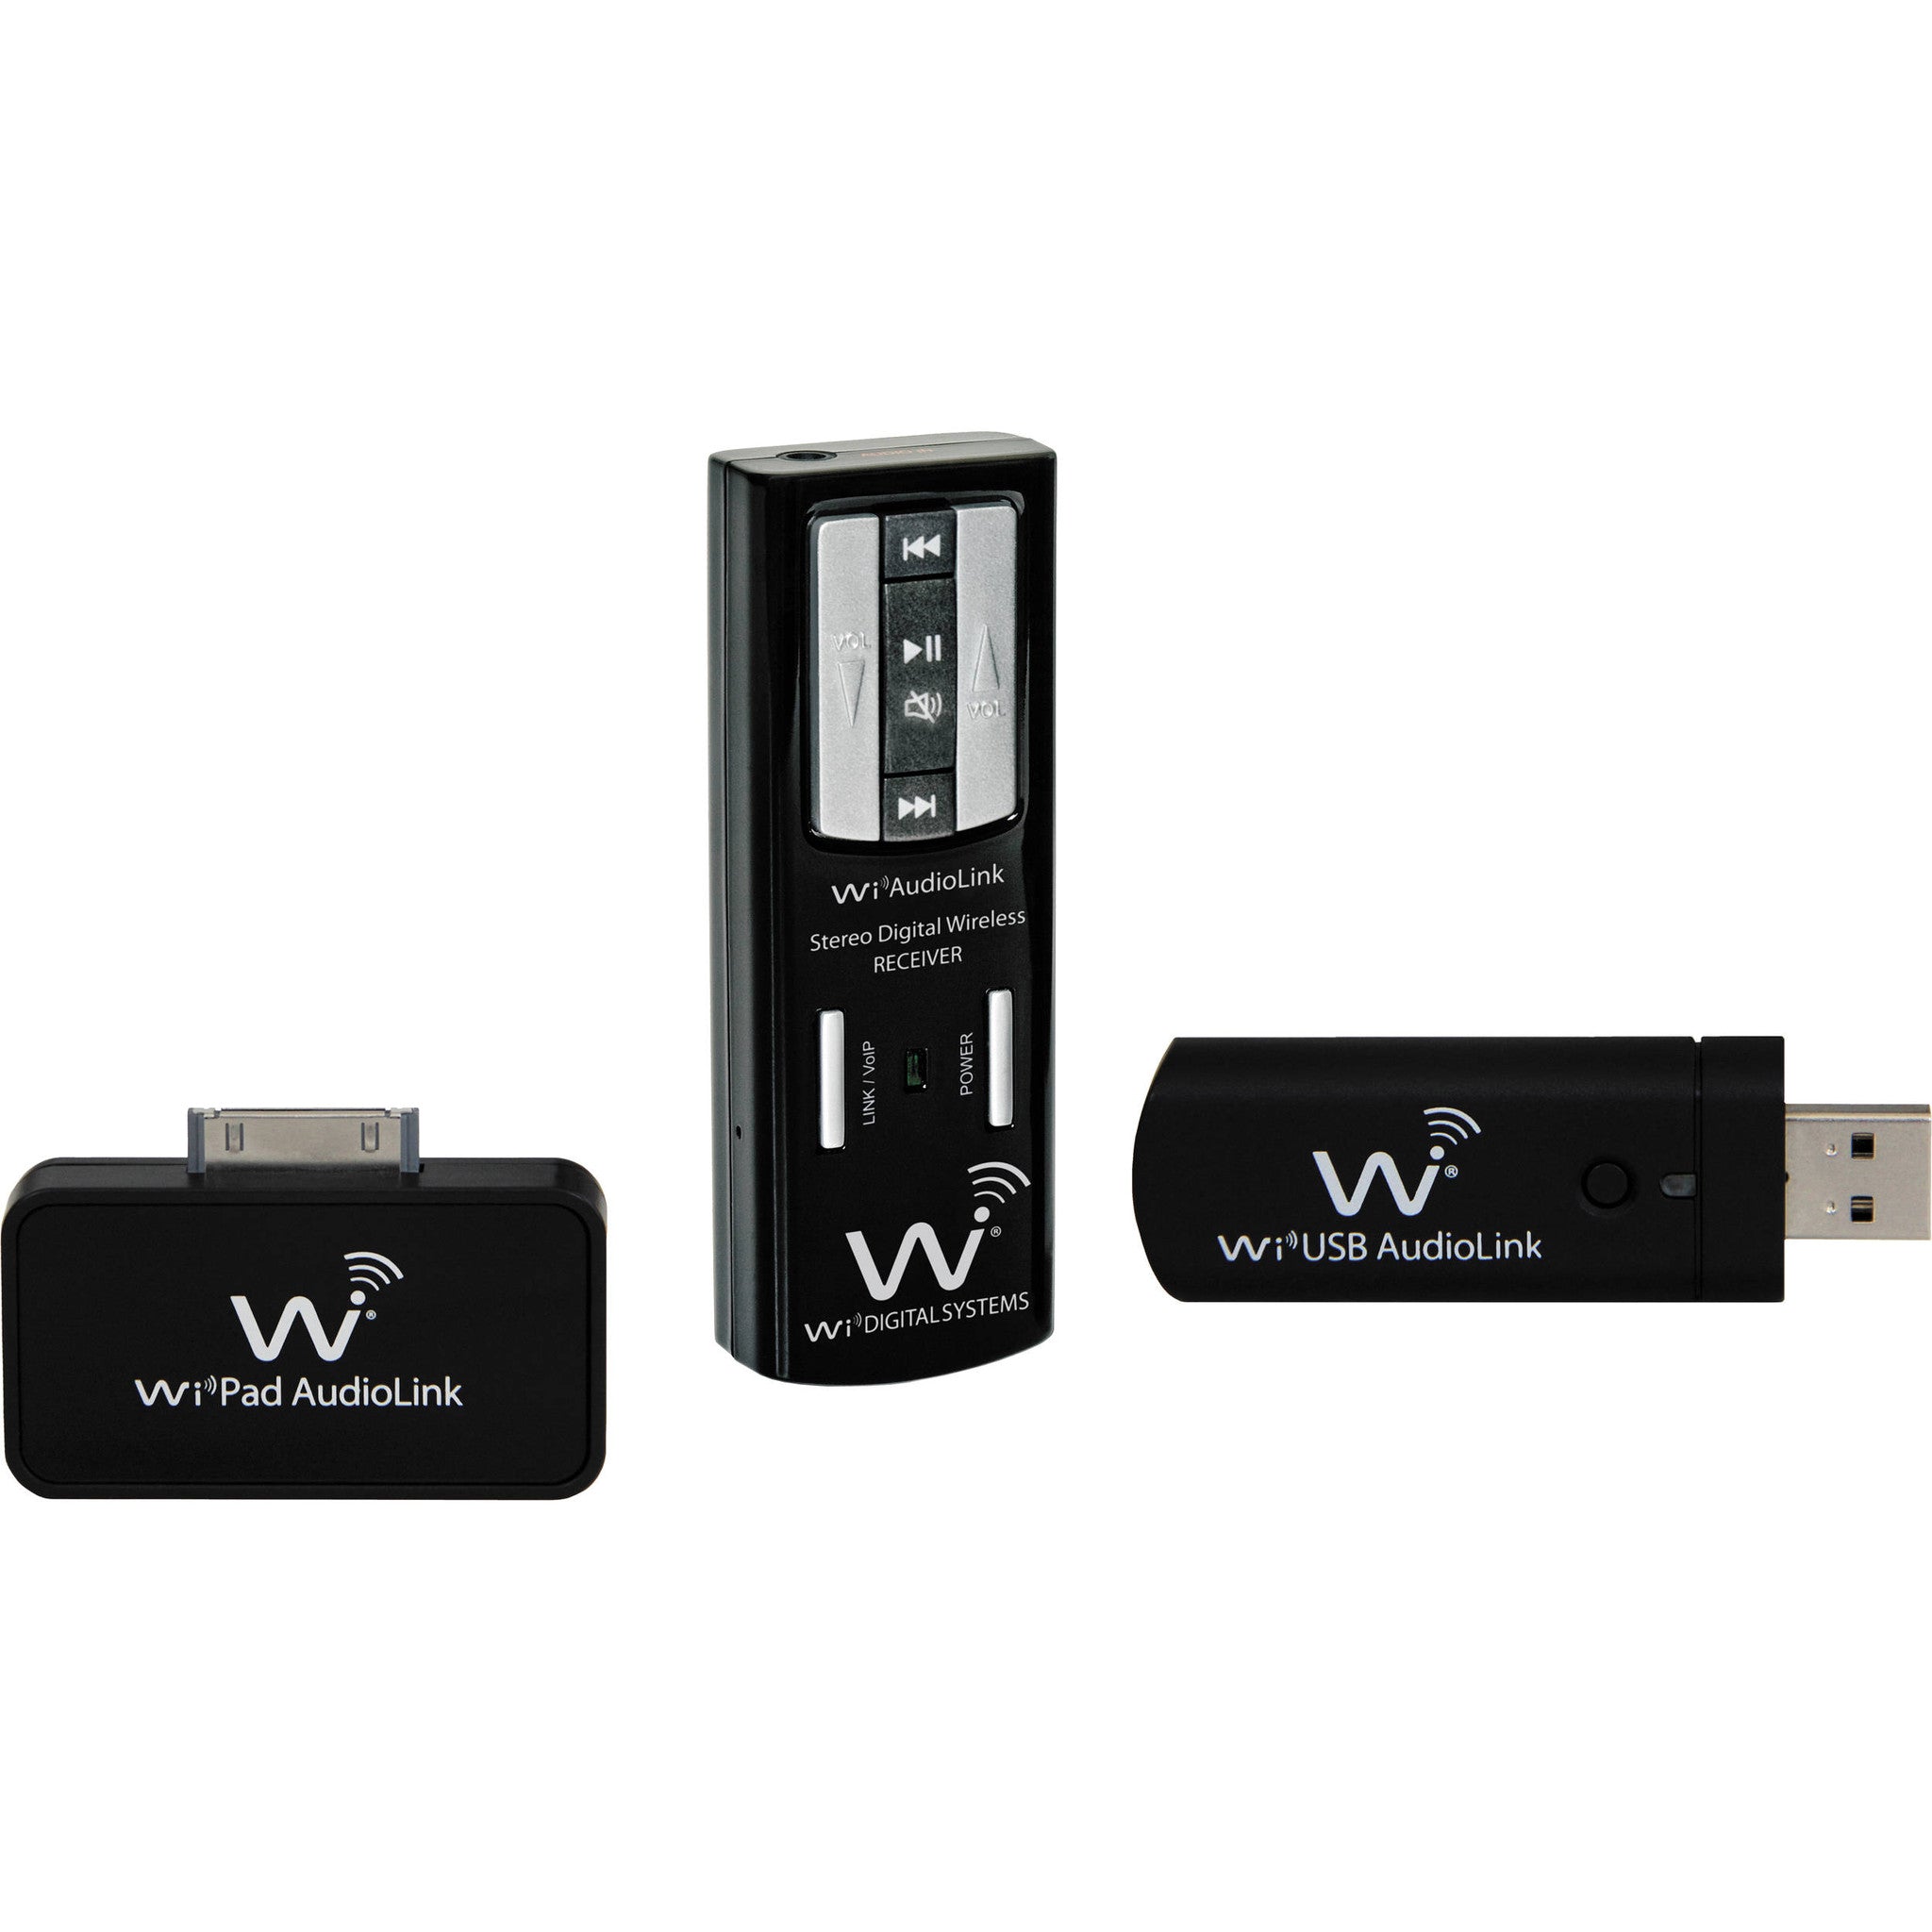 Wii Digital AudioLink Ui Digital Wireless System for iPad, iPhone, Mac, PC and Skype